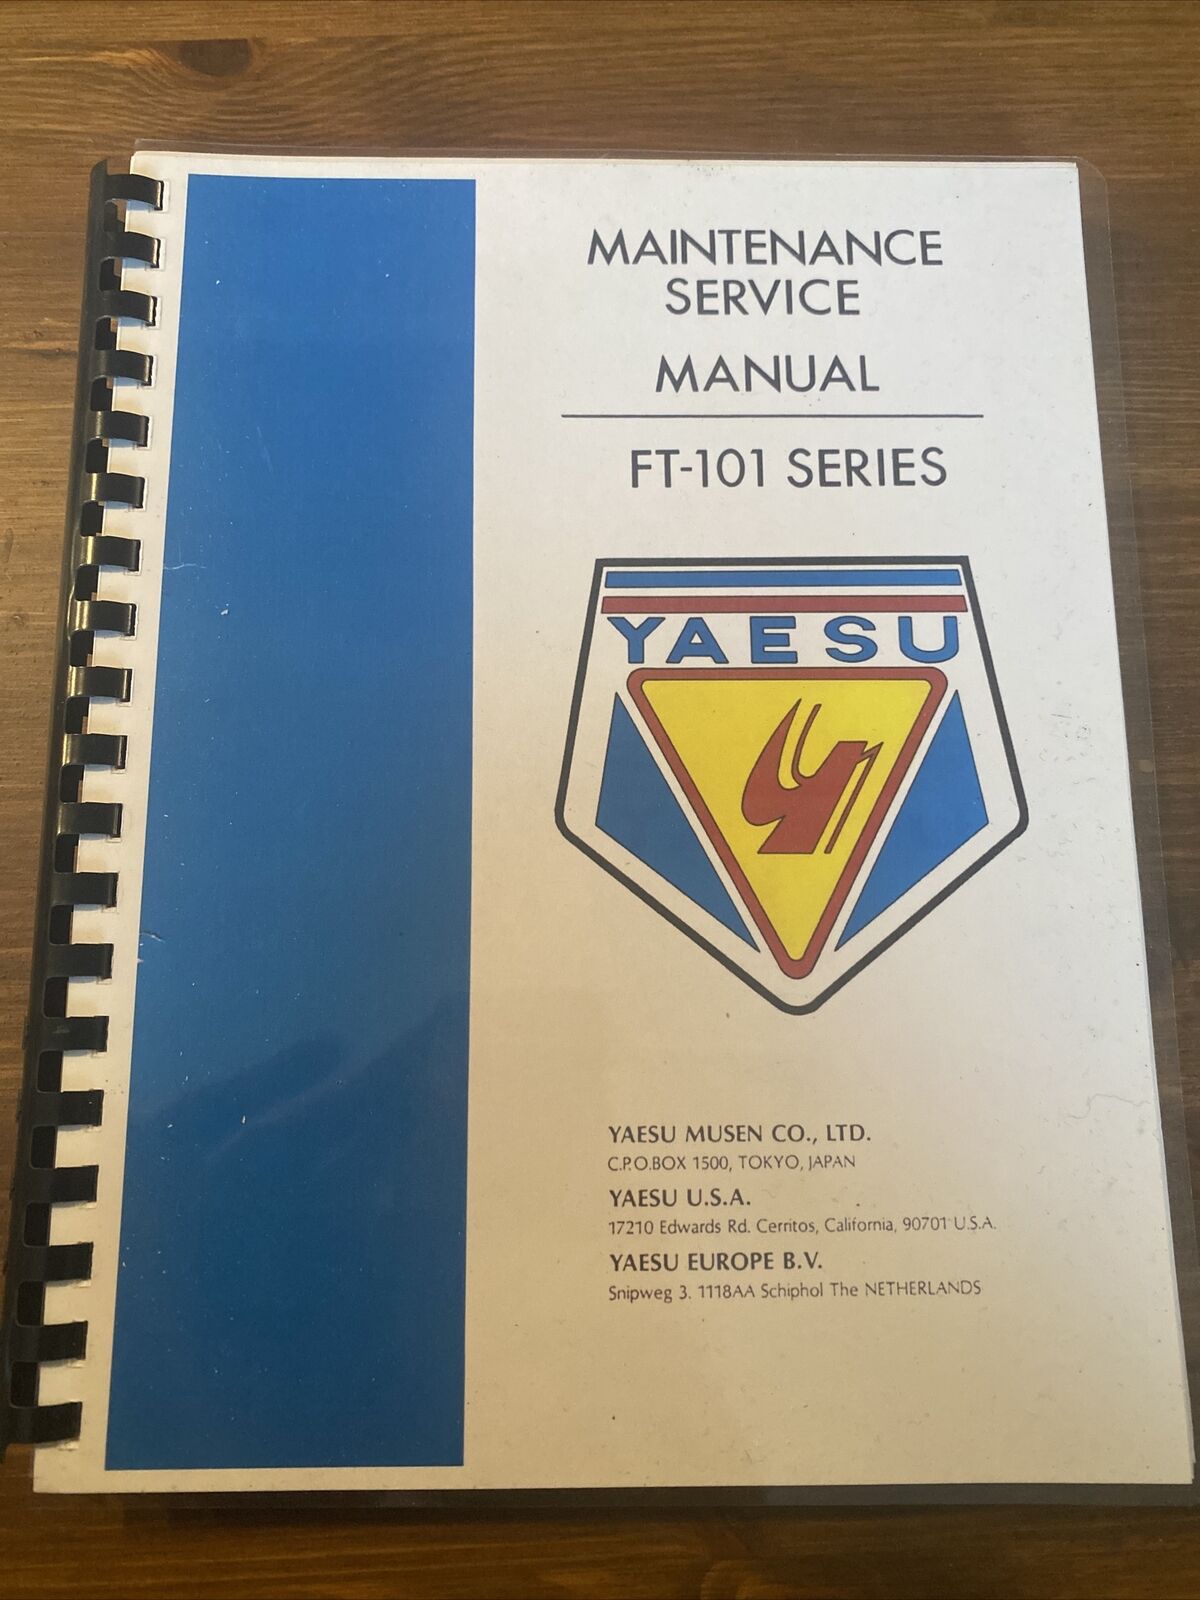 YAESU Ft-101 Series Maintenance Service Manual - Book GK46